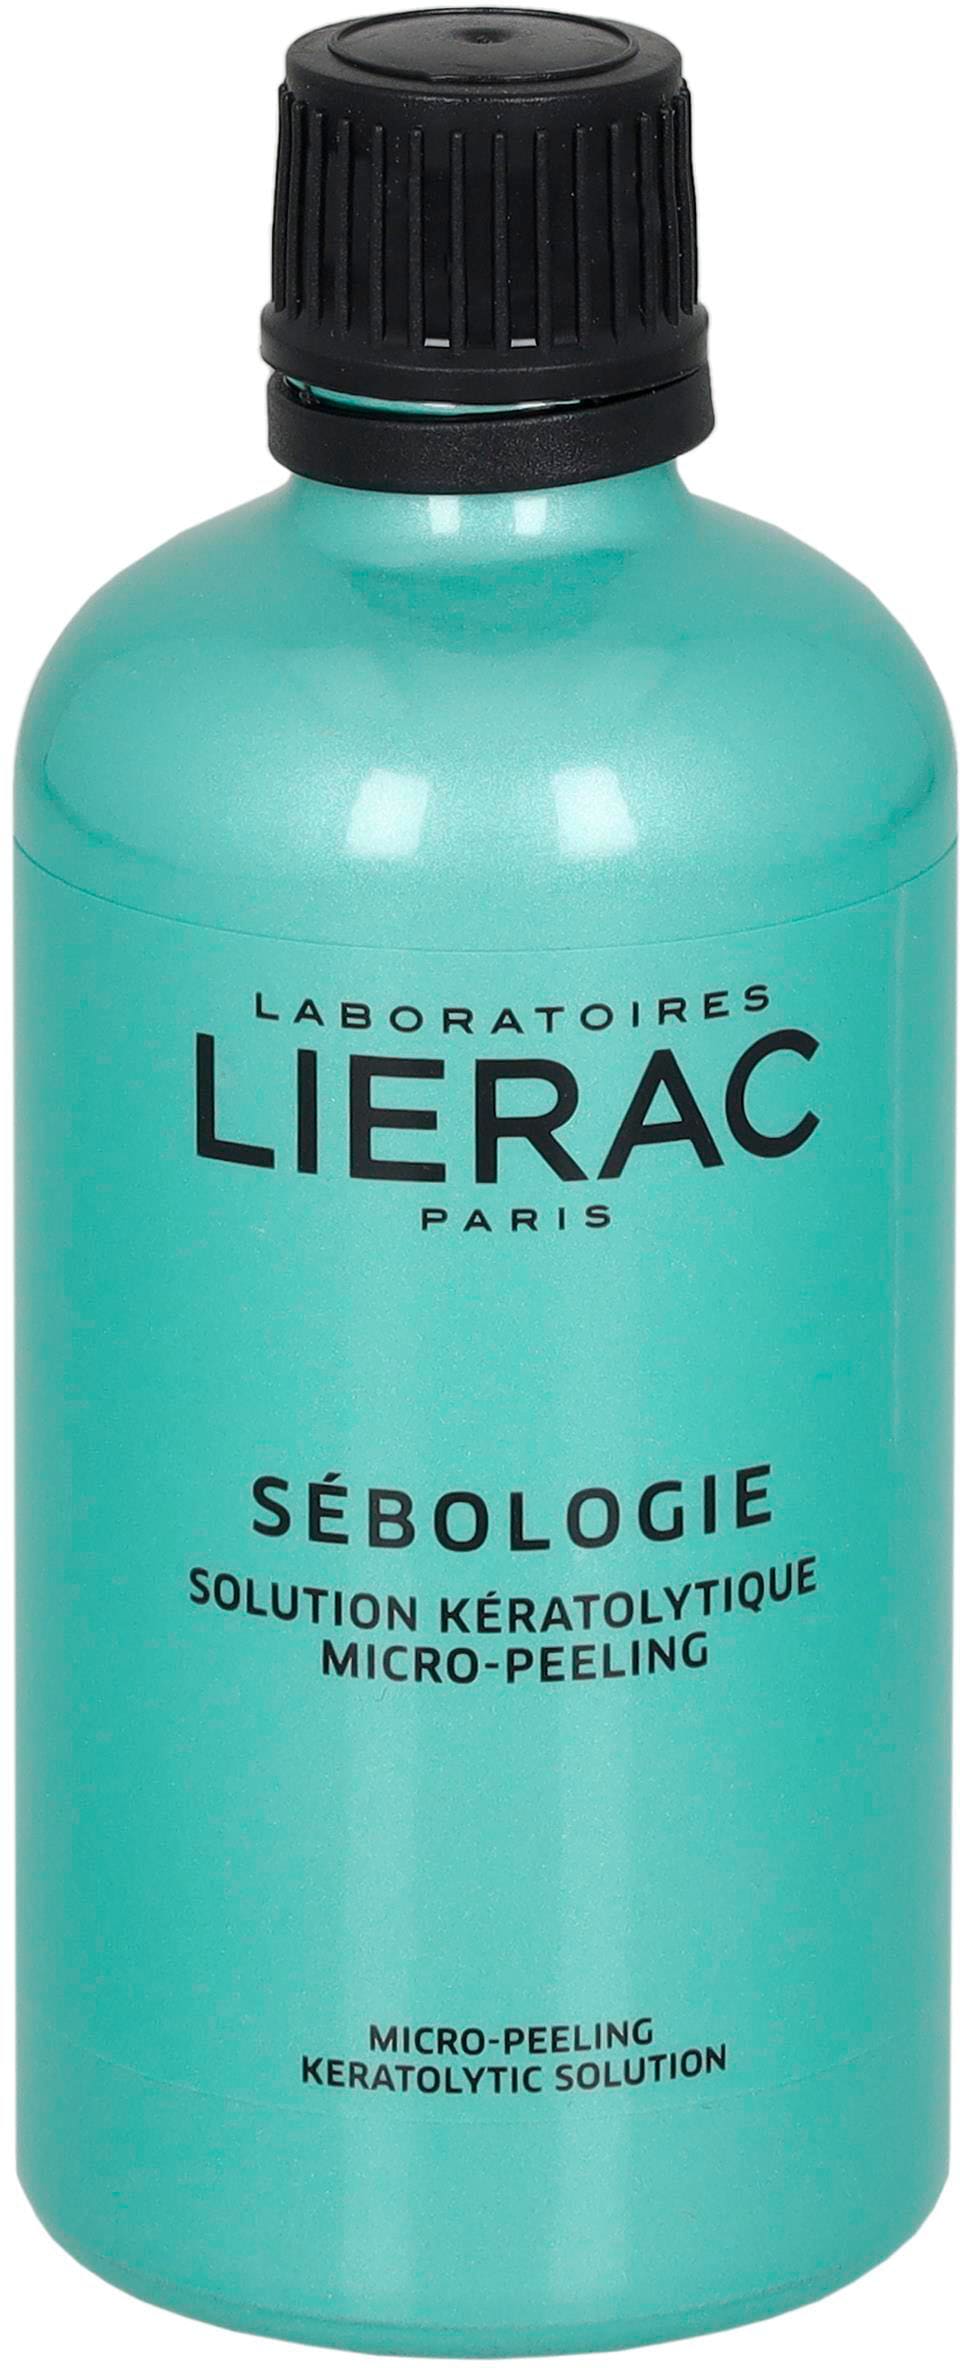 Lierac Paris Online-Shop ▷ Dermokosmetika | Kosmetik BAUR